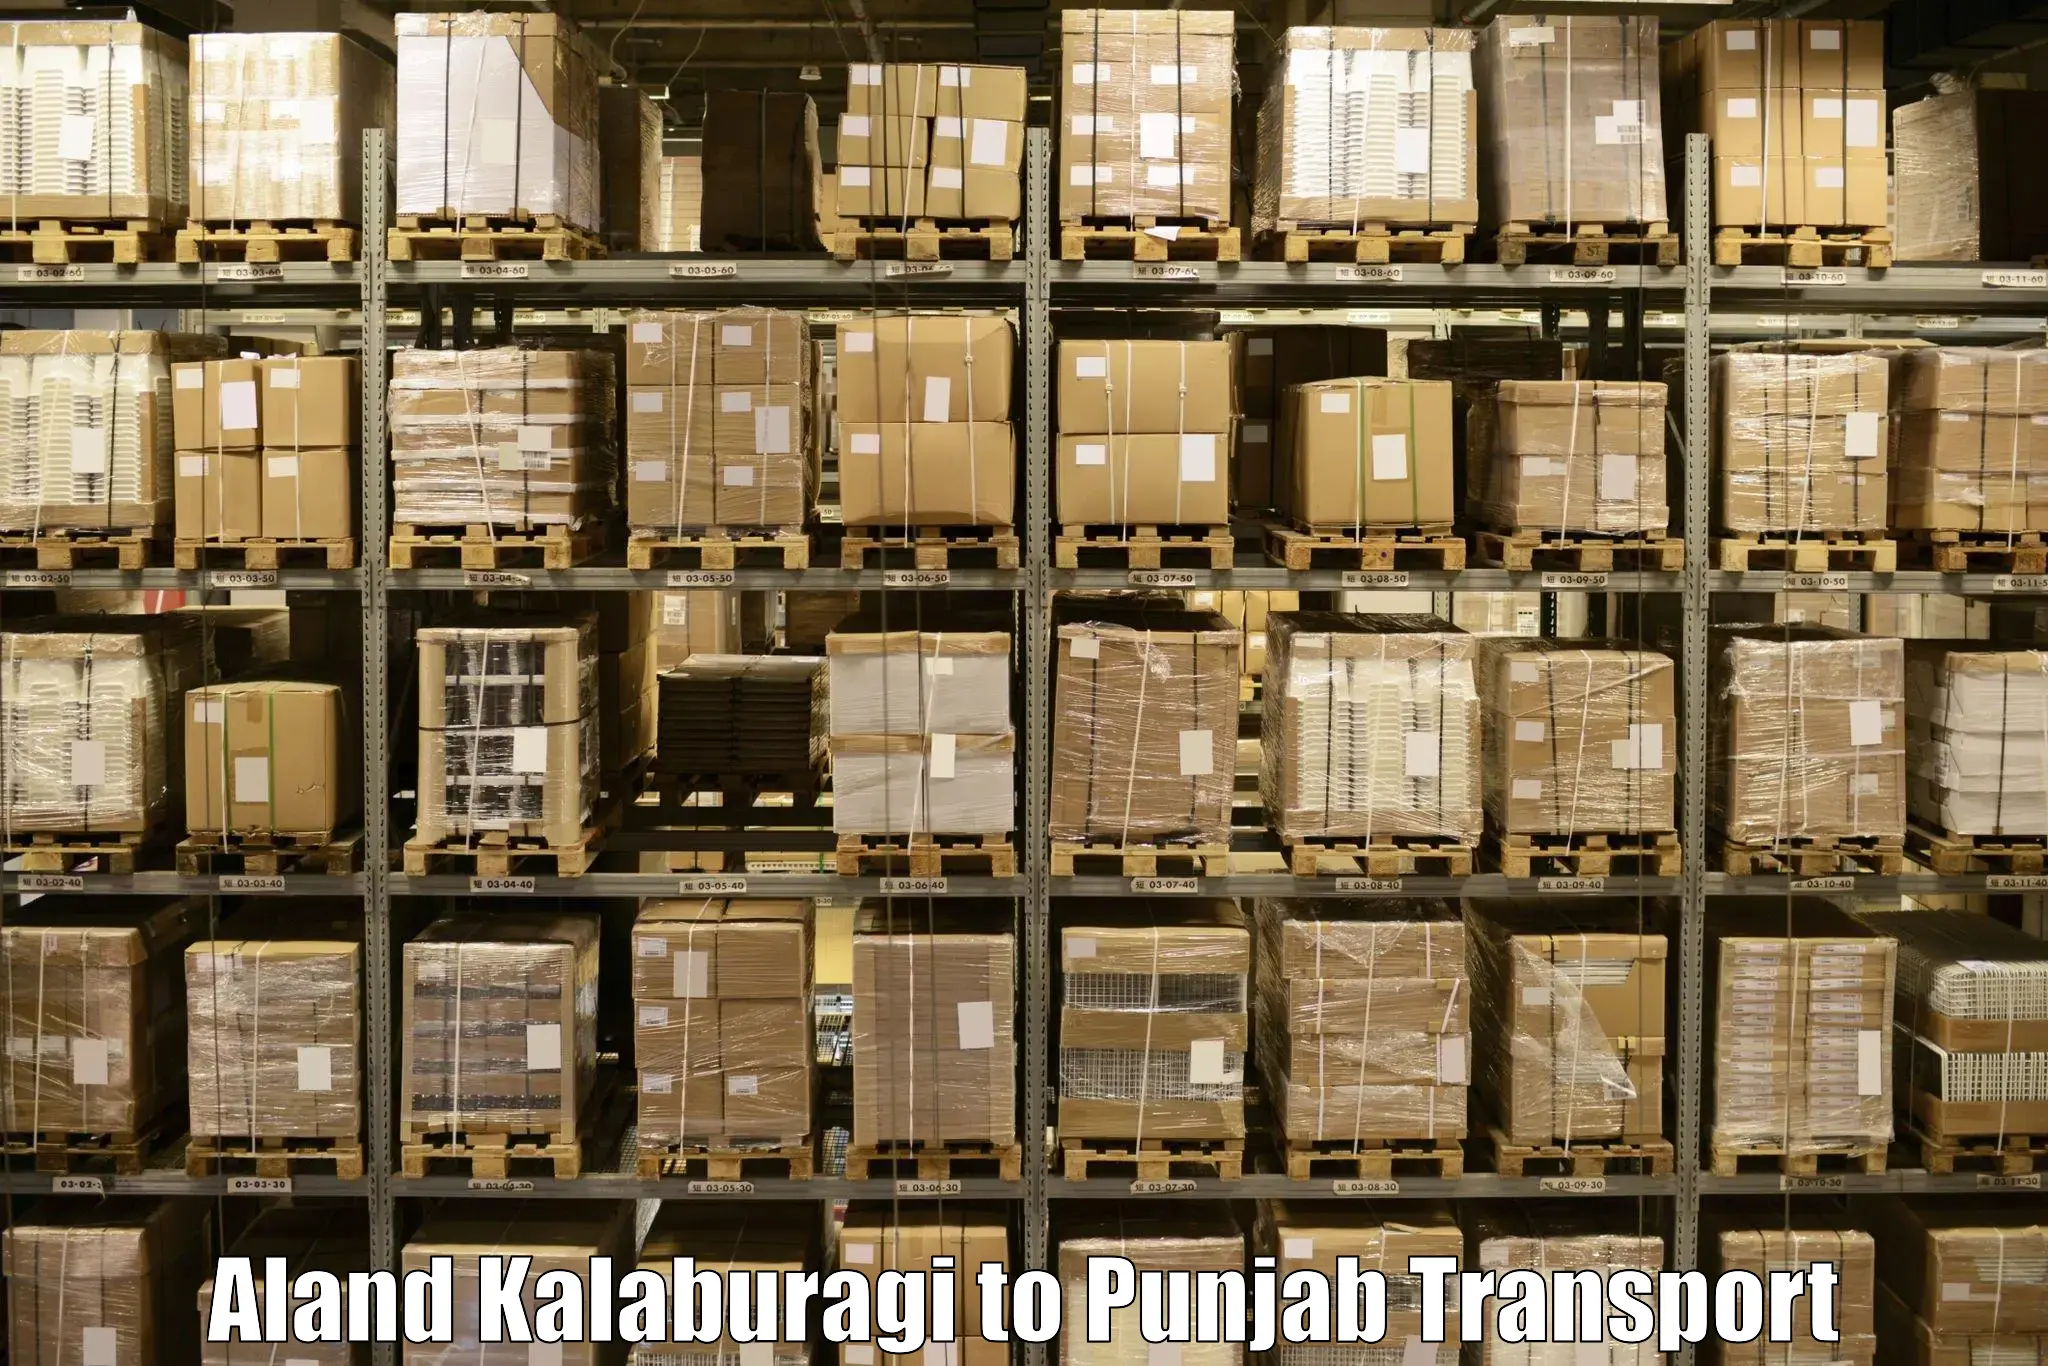 Truck transport companies in India Aland Kalaburagi to Begowal